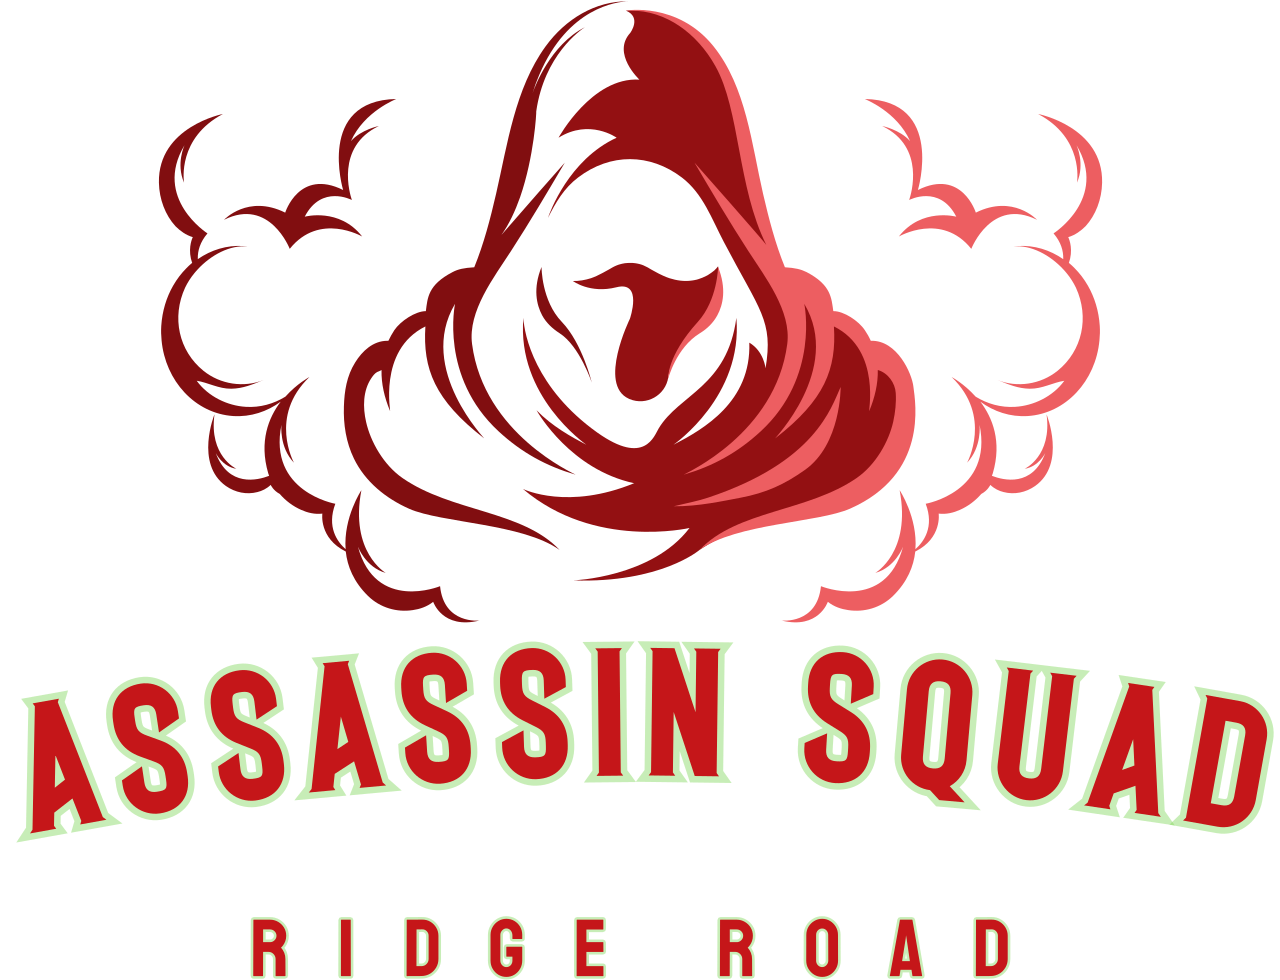 ASSASSIN SQUAD's web page